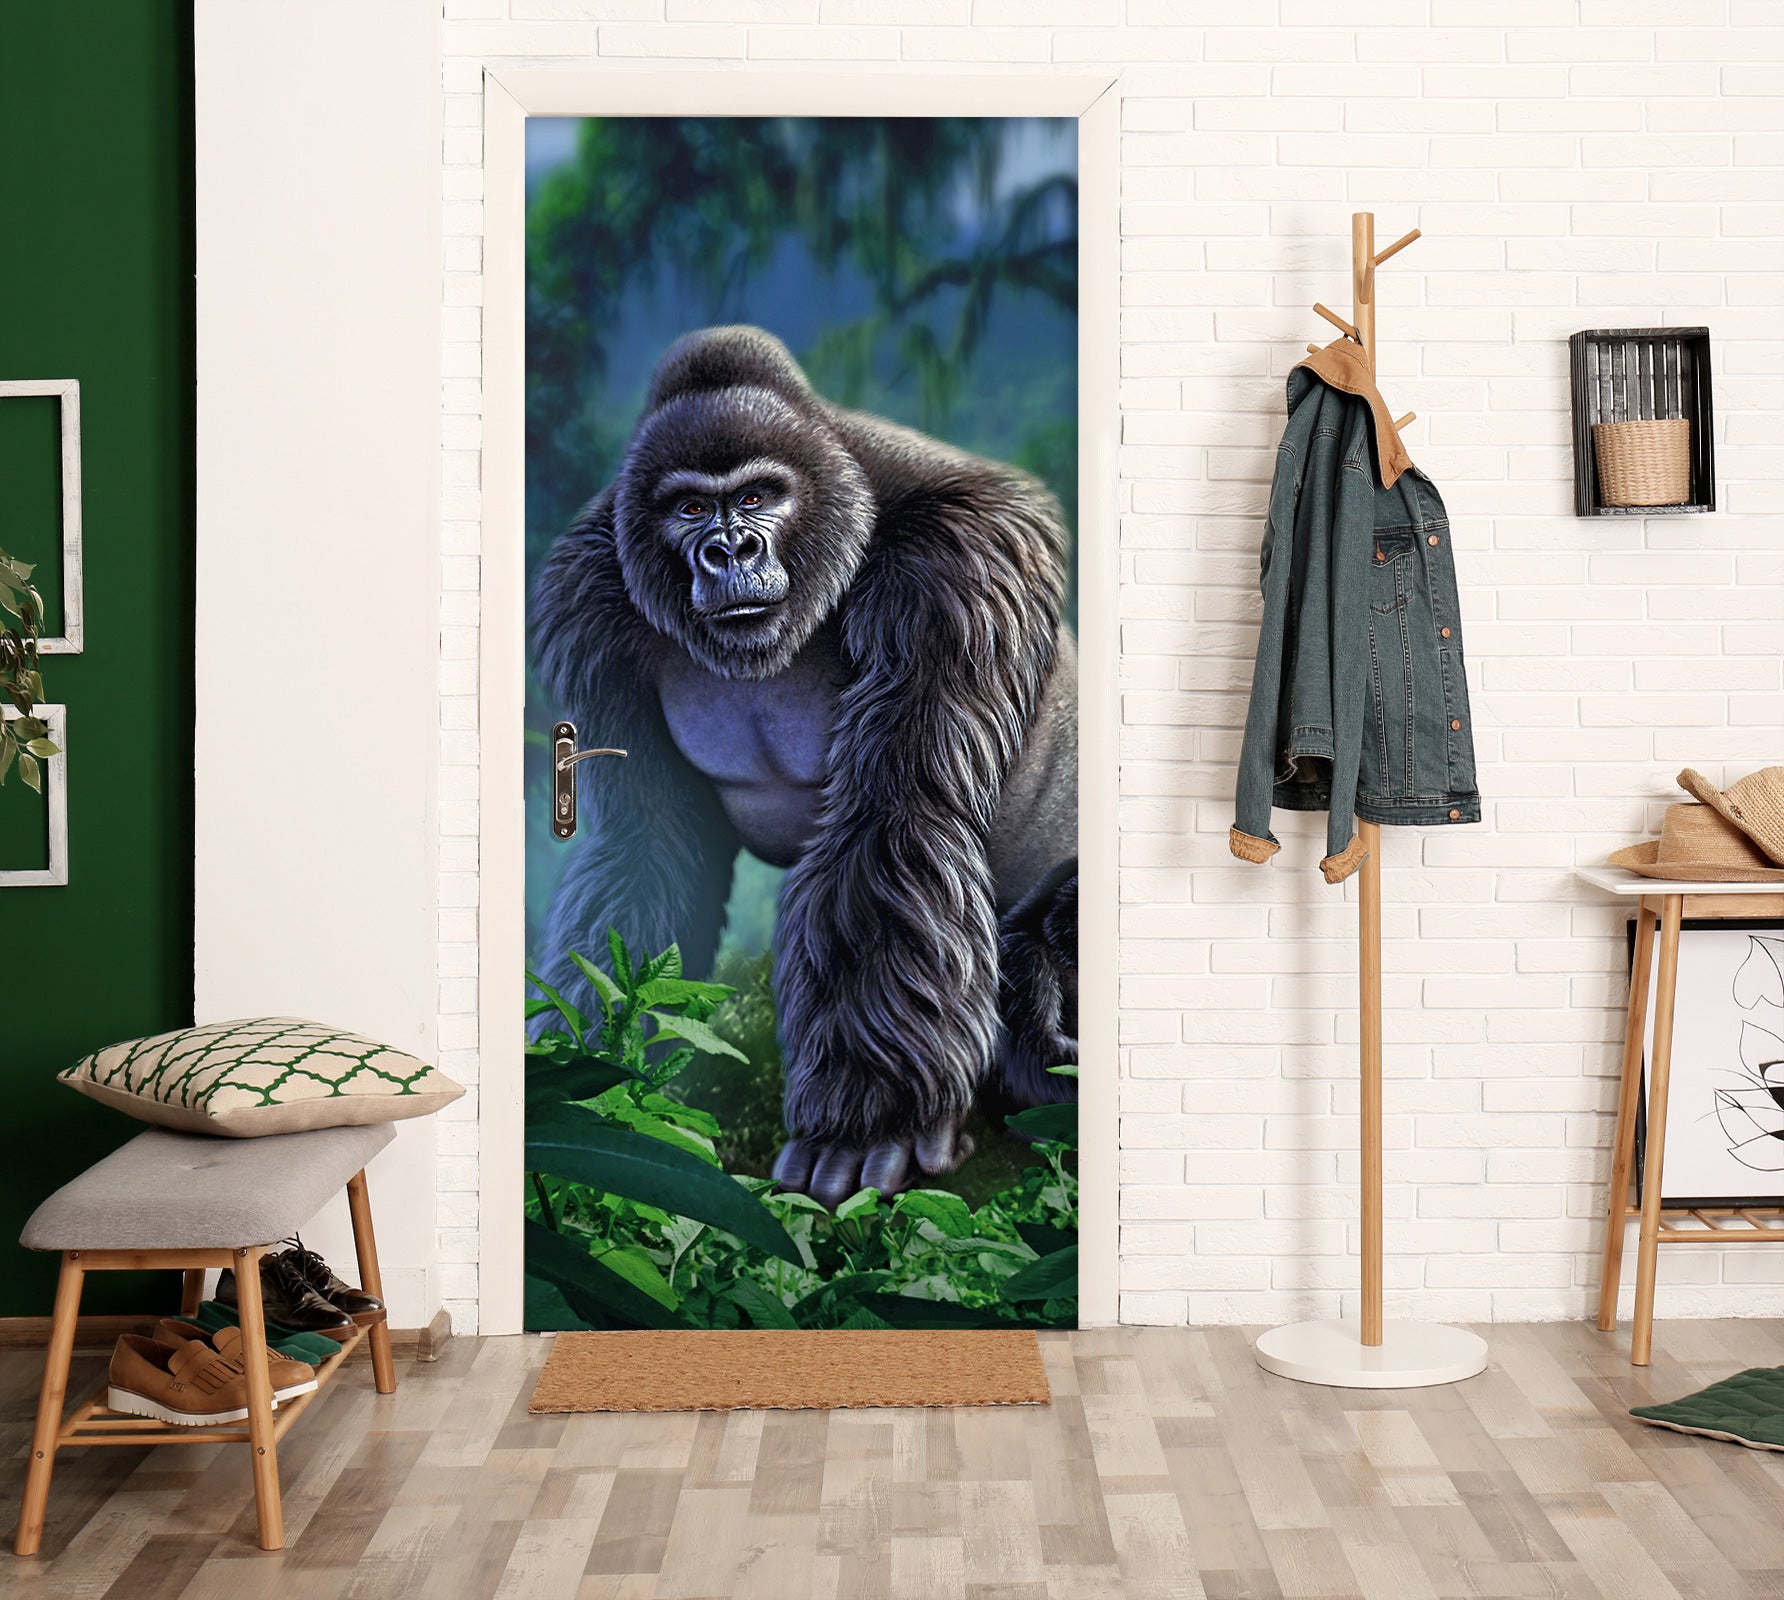 3D Chimpanzees 112139 Jerry LoFaro Door Mural